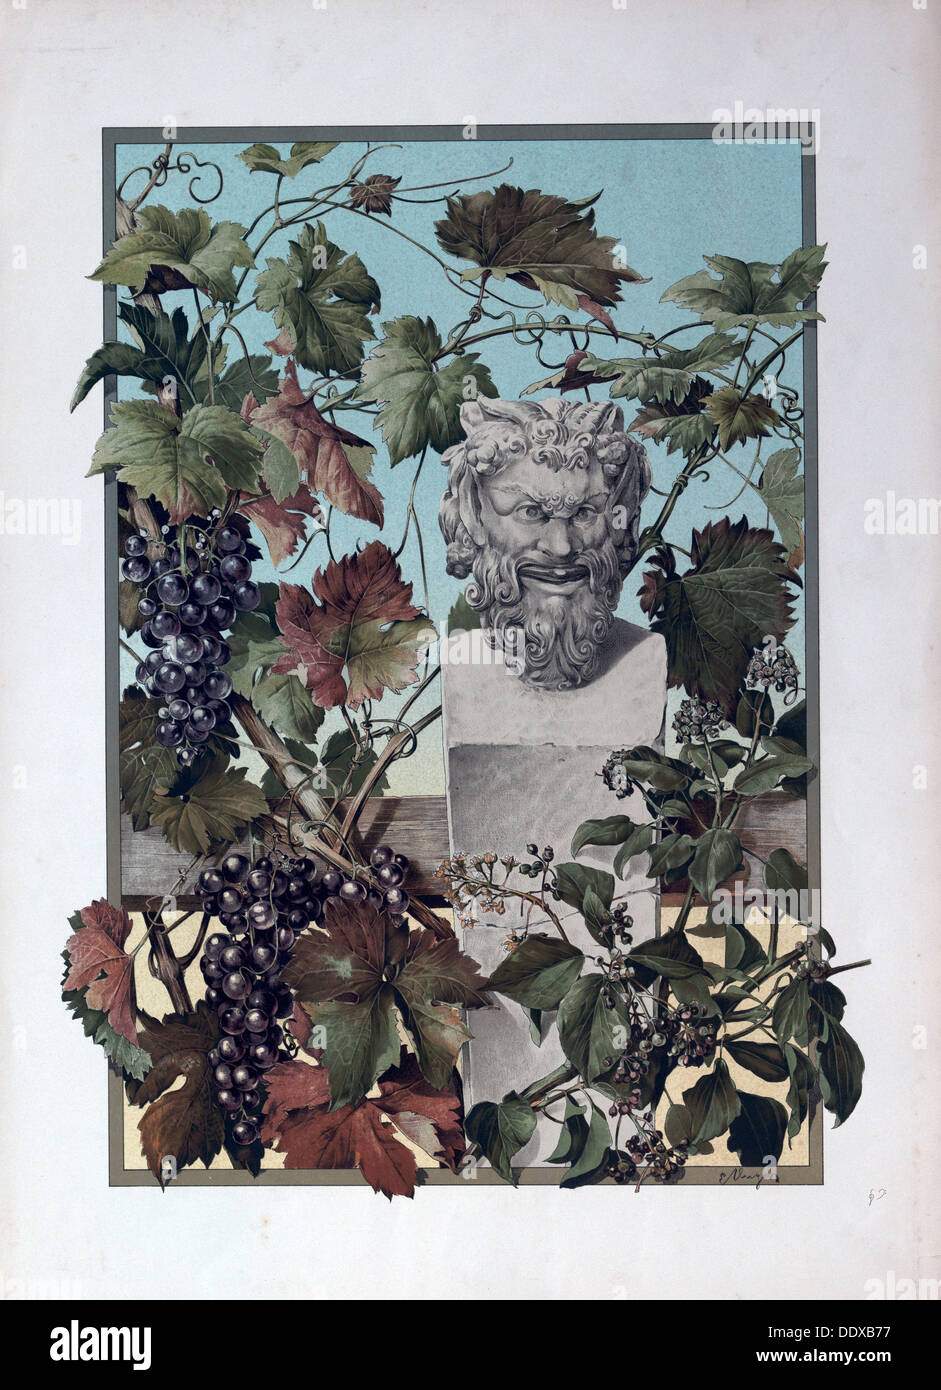 The plant, grapes, bacchus, wine, mythology, vine, symbol, statue, sculpture, 19th century, green, leaf, branch, floral Stock Photo